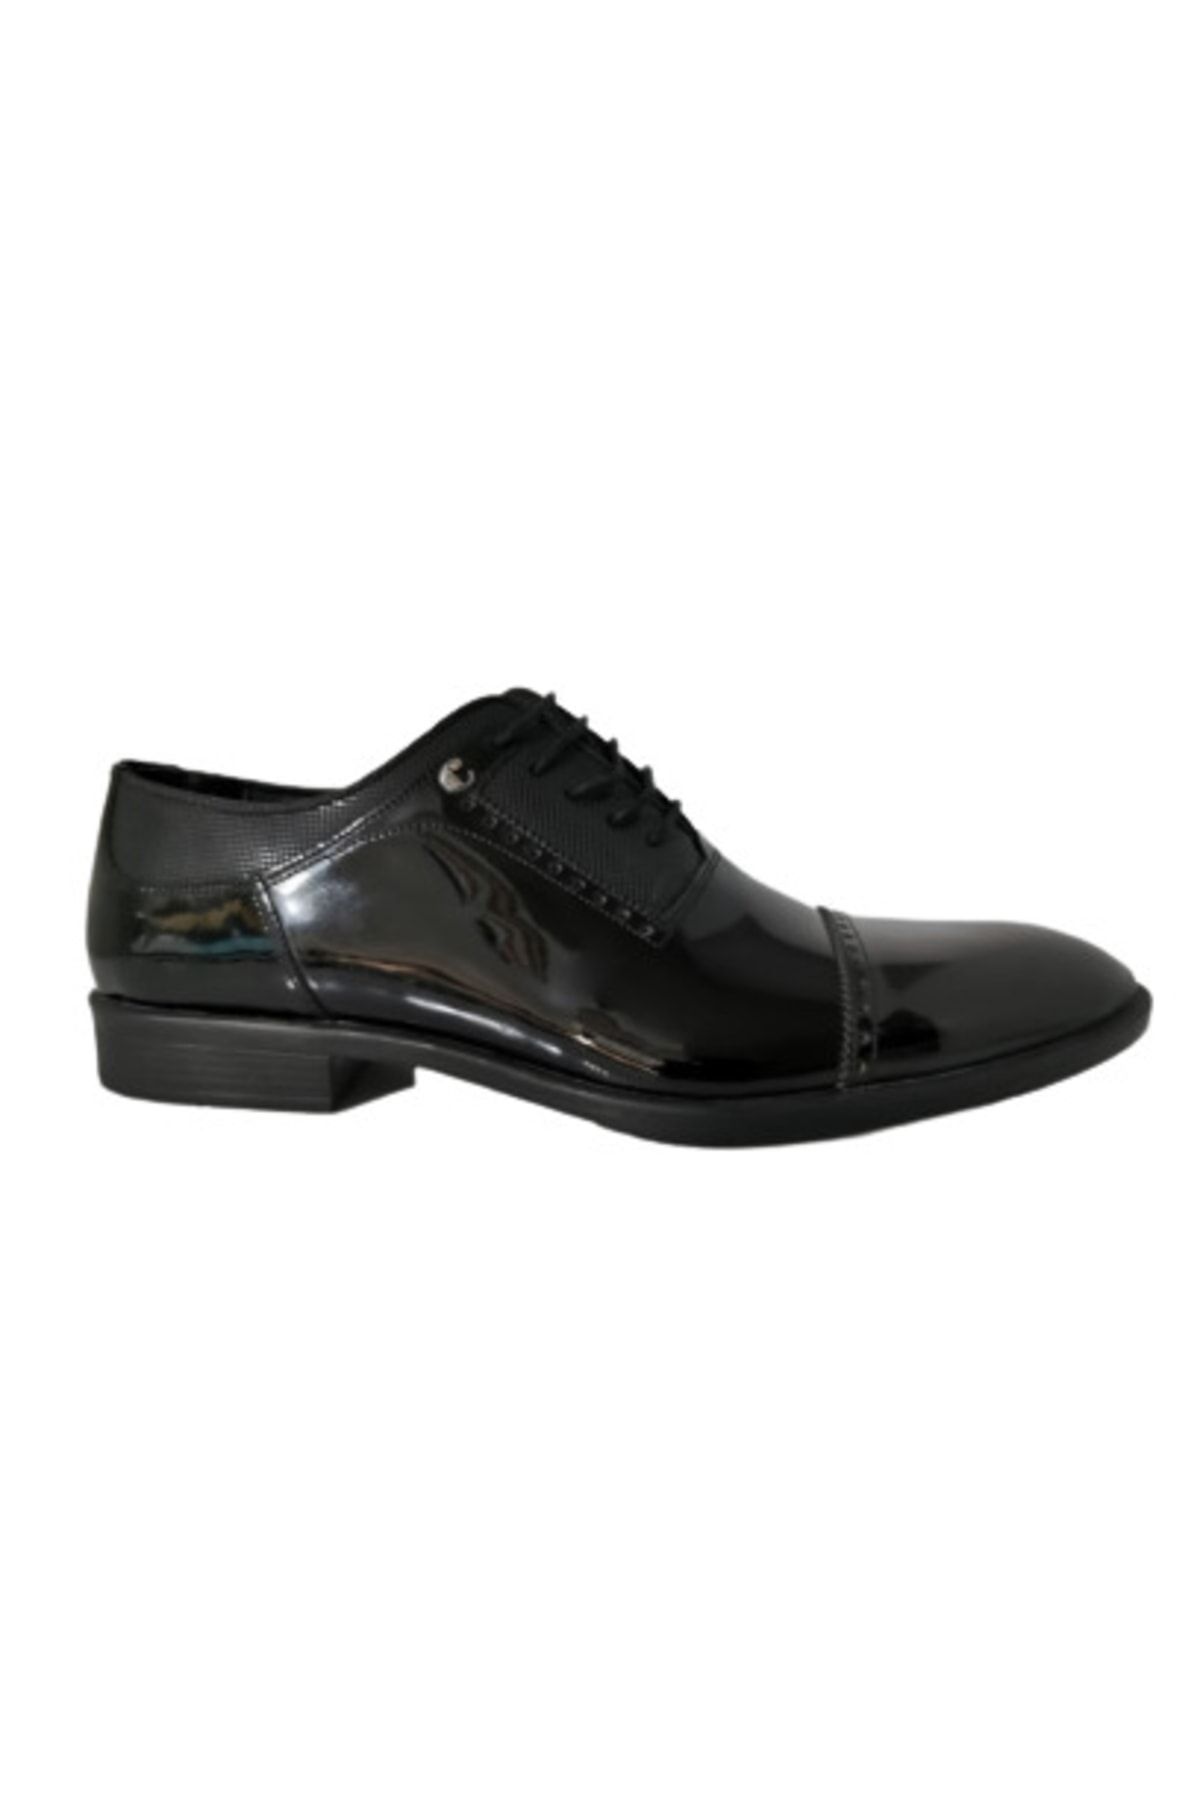 Cacharel C1615b Erkek Klasik Ayakkabı/siyah Rugan/41